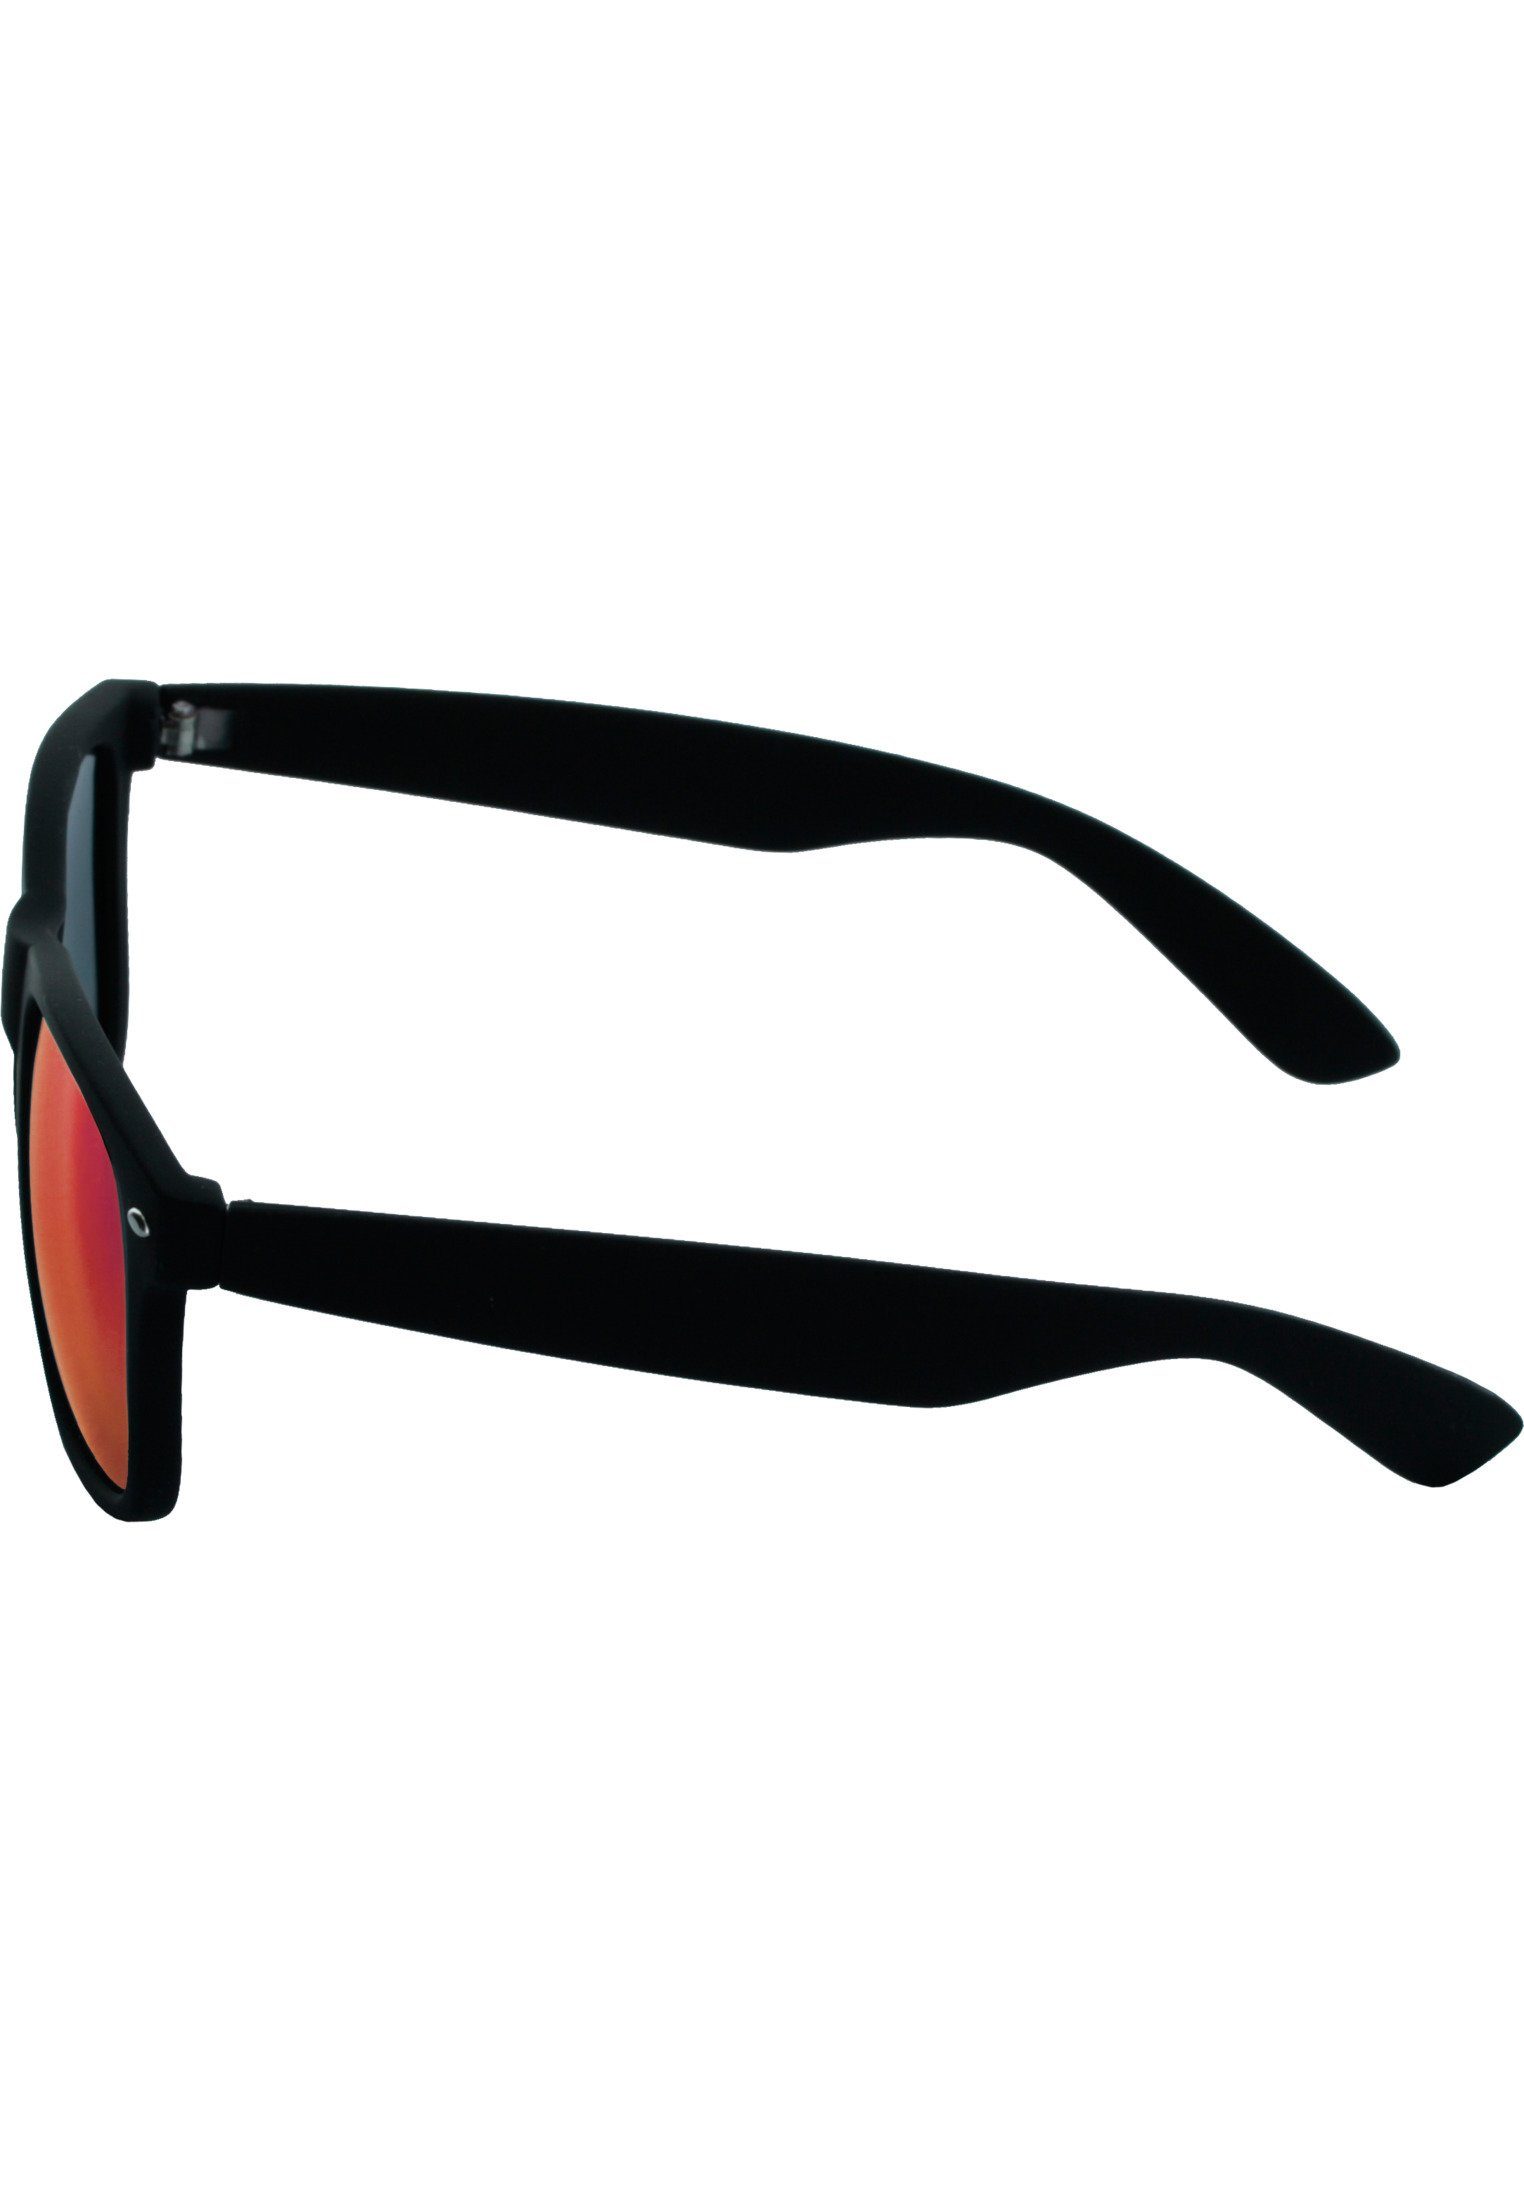 MSTRDS Sonnenbrille Accessoires Mirror blk/red Likoma Sunglasses